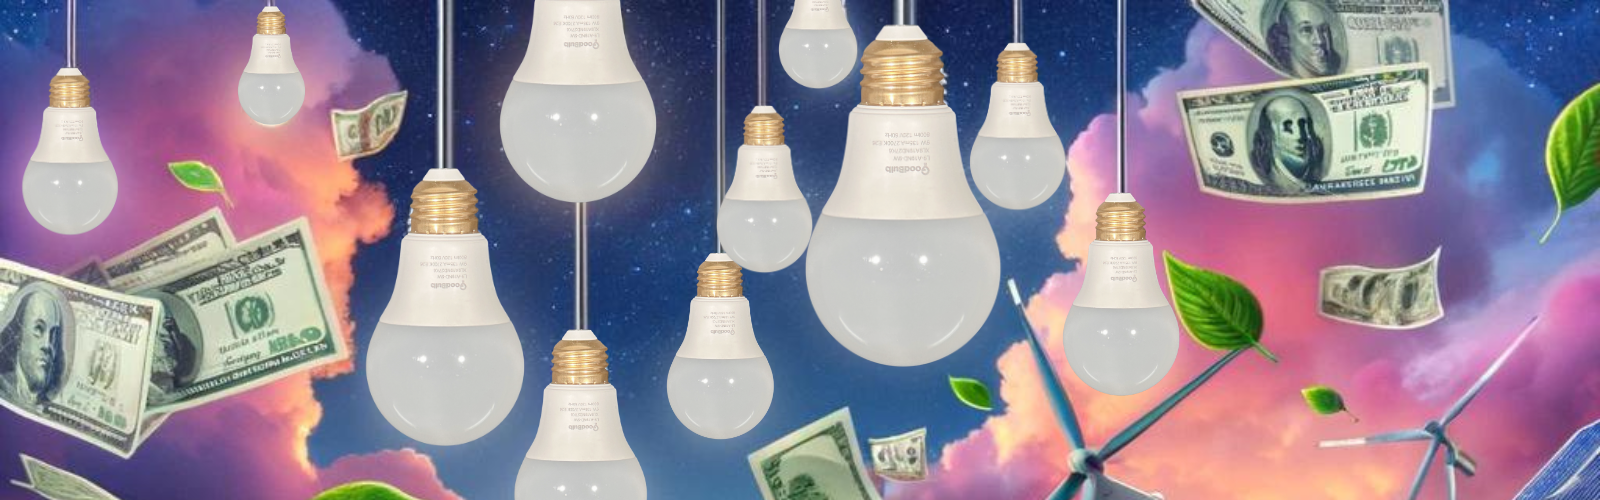 Benefits of LED Light Bulbs